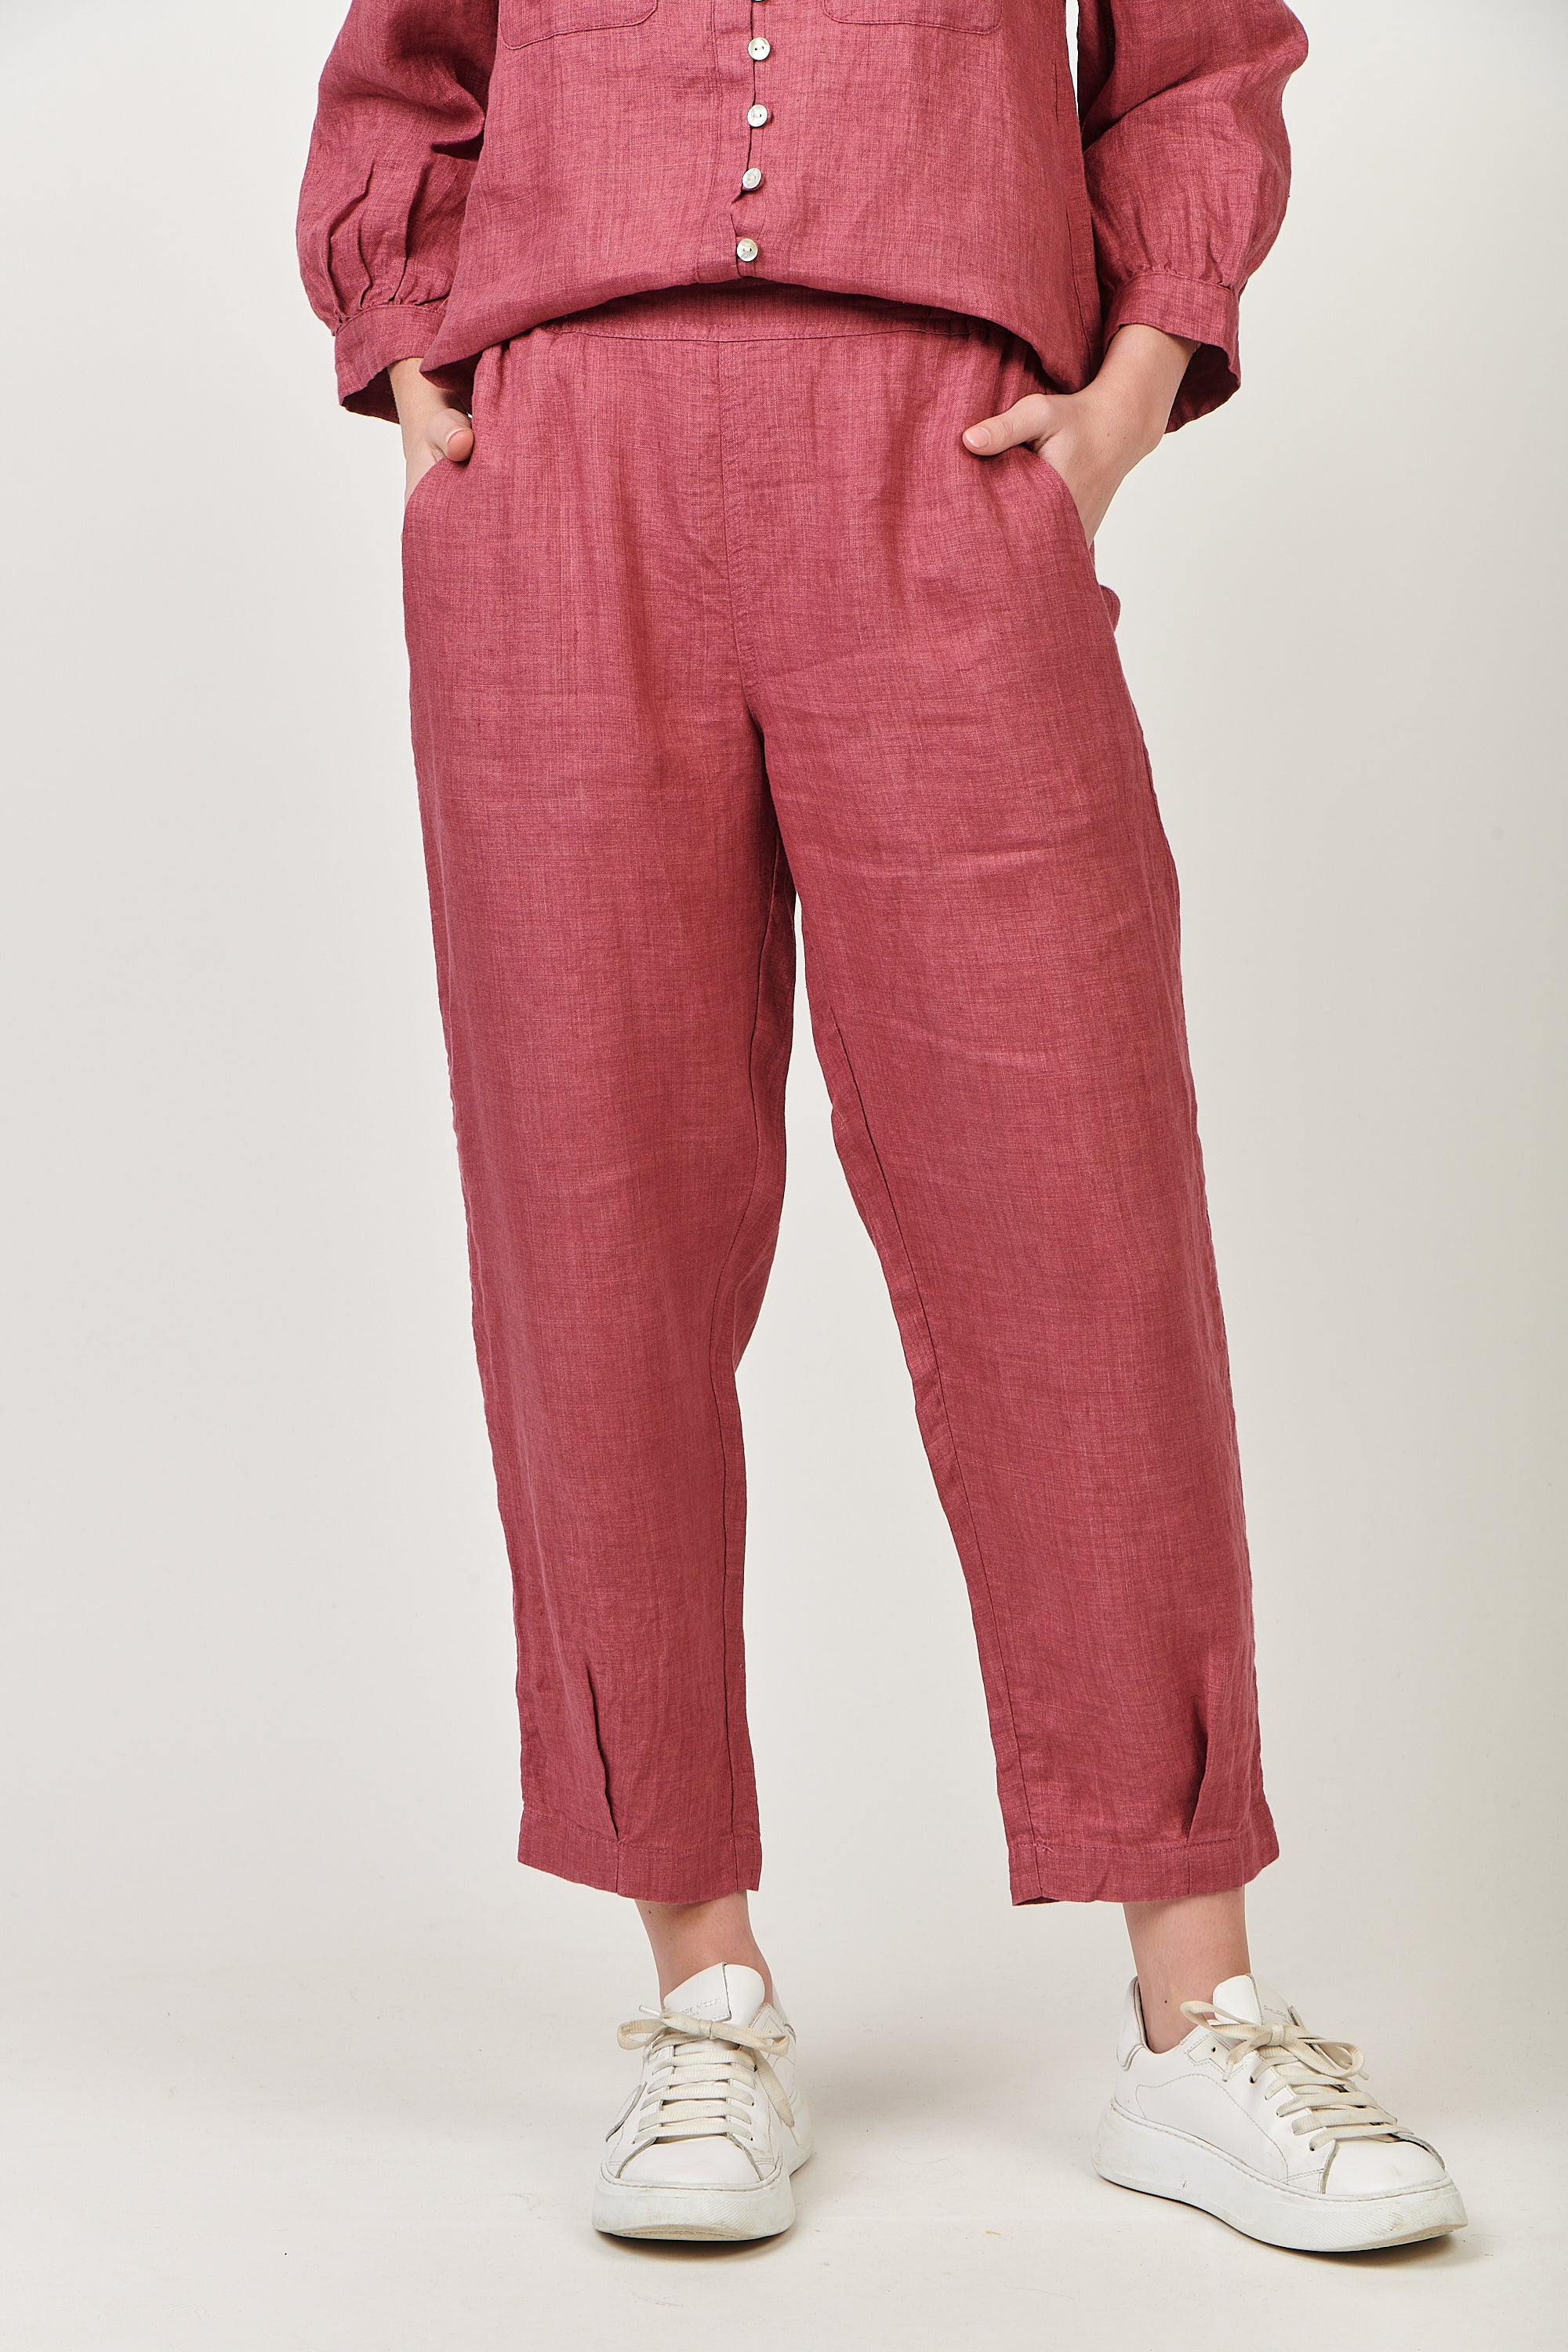 Linen Pants - Rhubarb-Pants-Naturals by O&J-The Bay Room